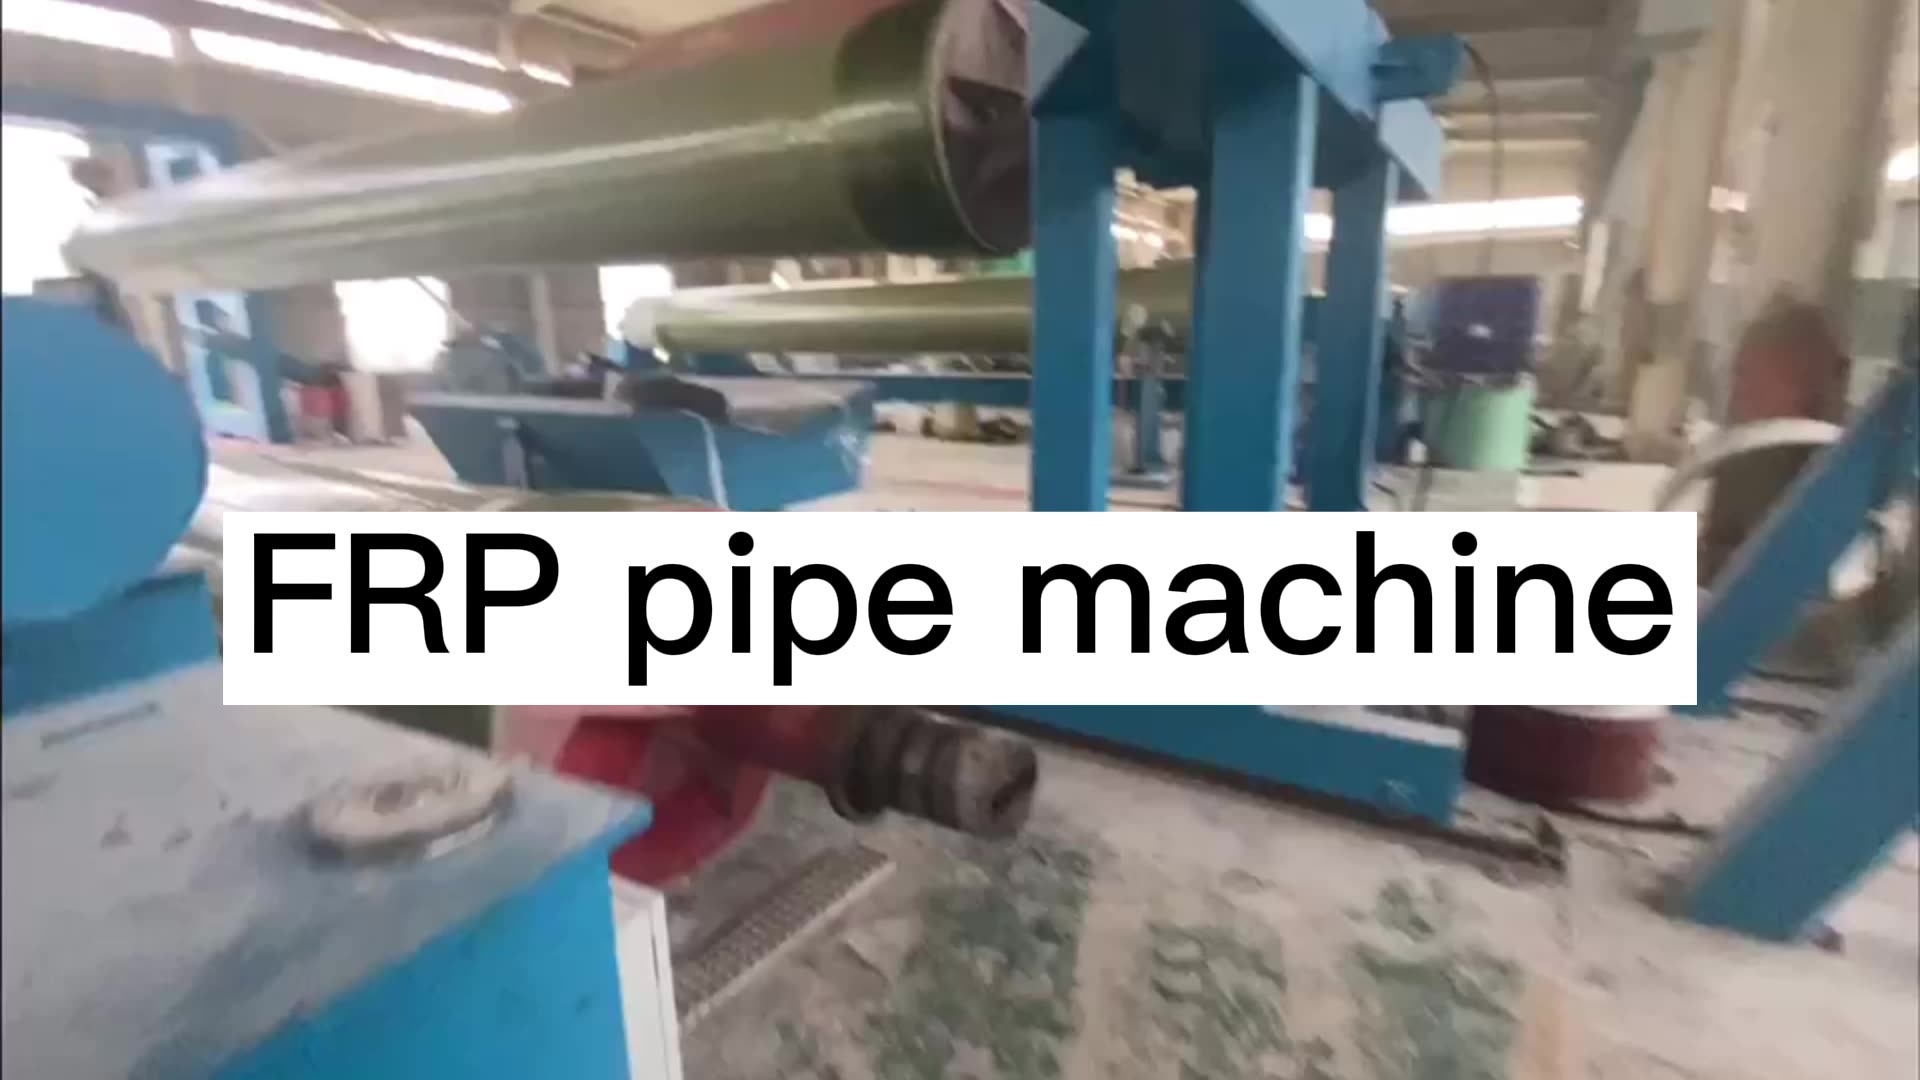 QFW-2500VI Computer Control FRP pipe machine RPM Pipe production line1